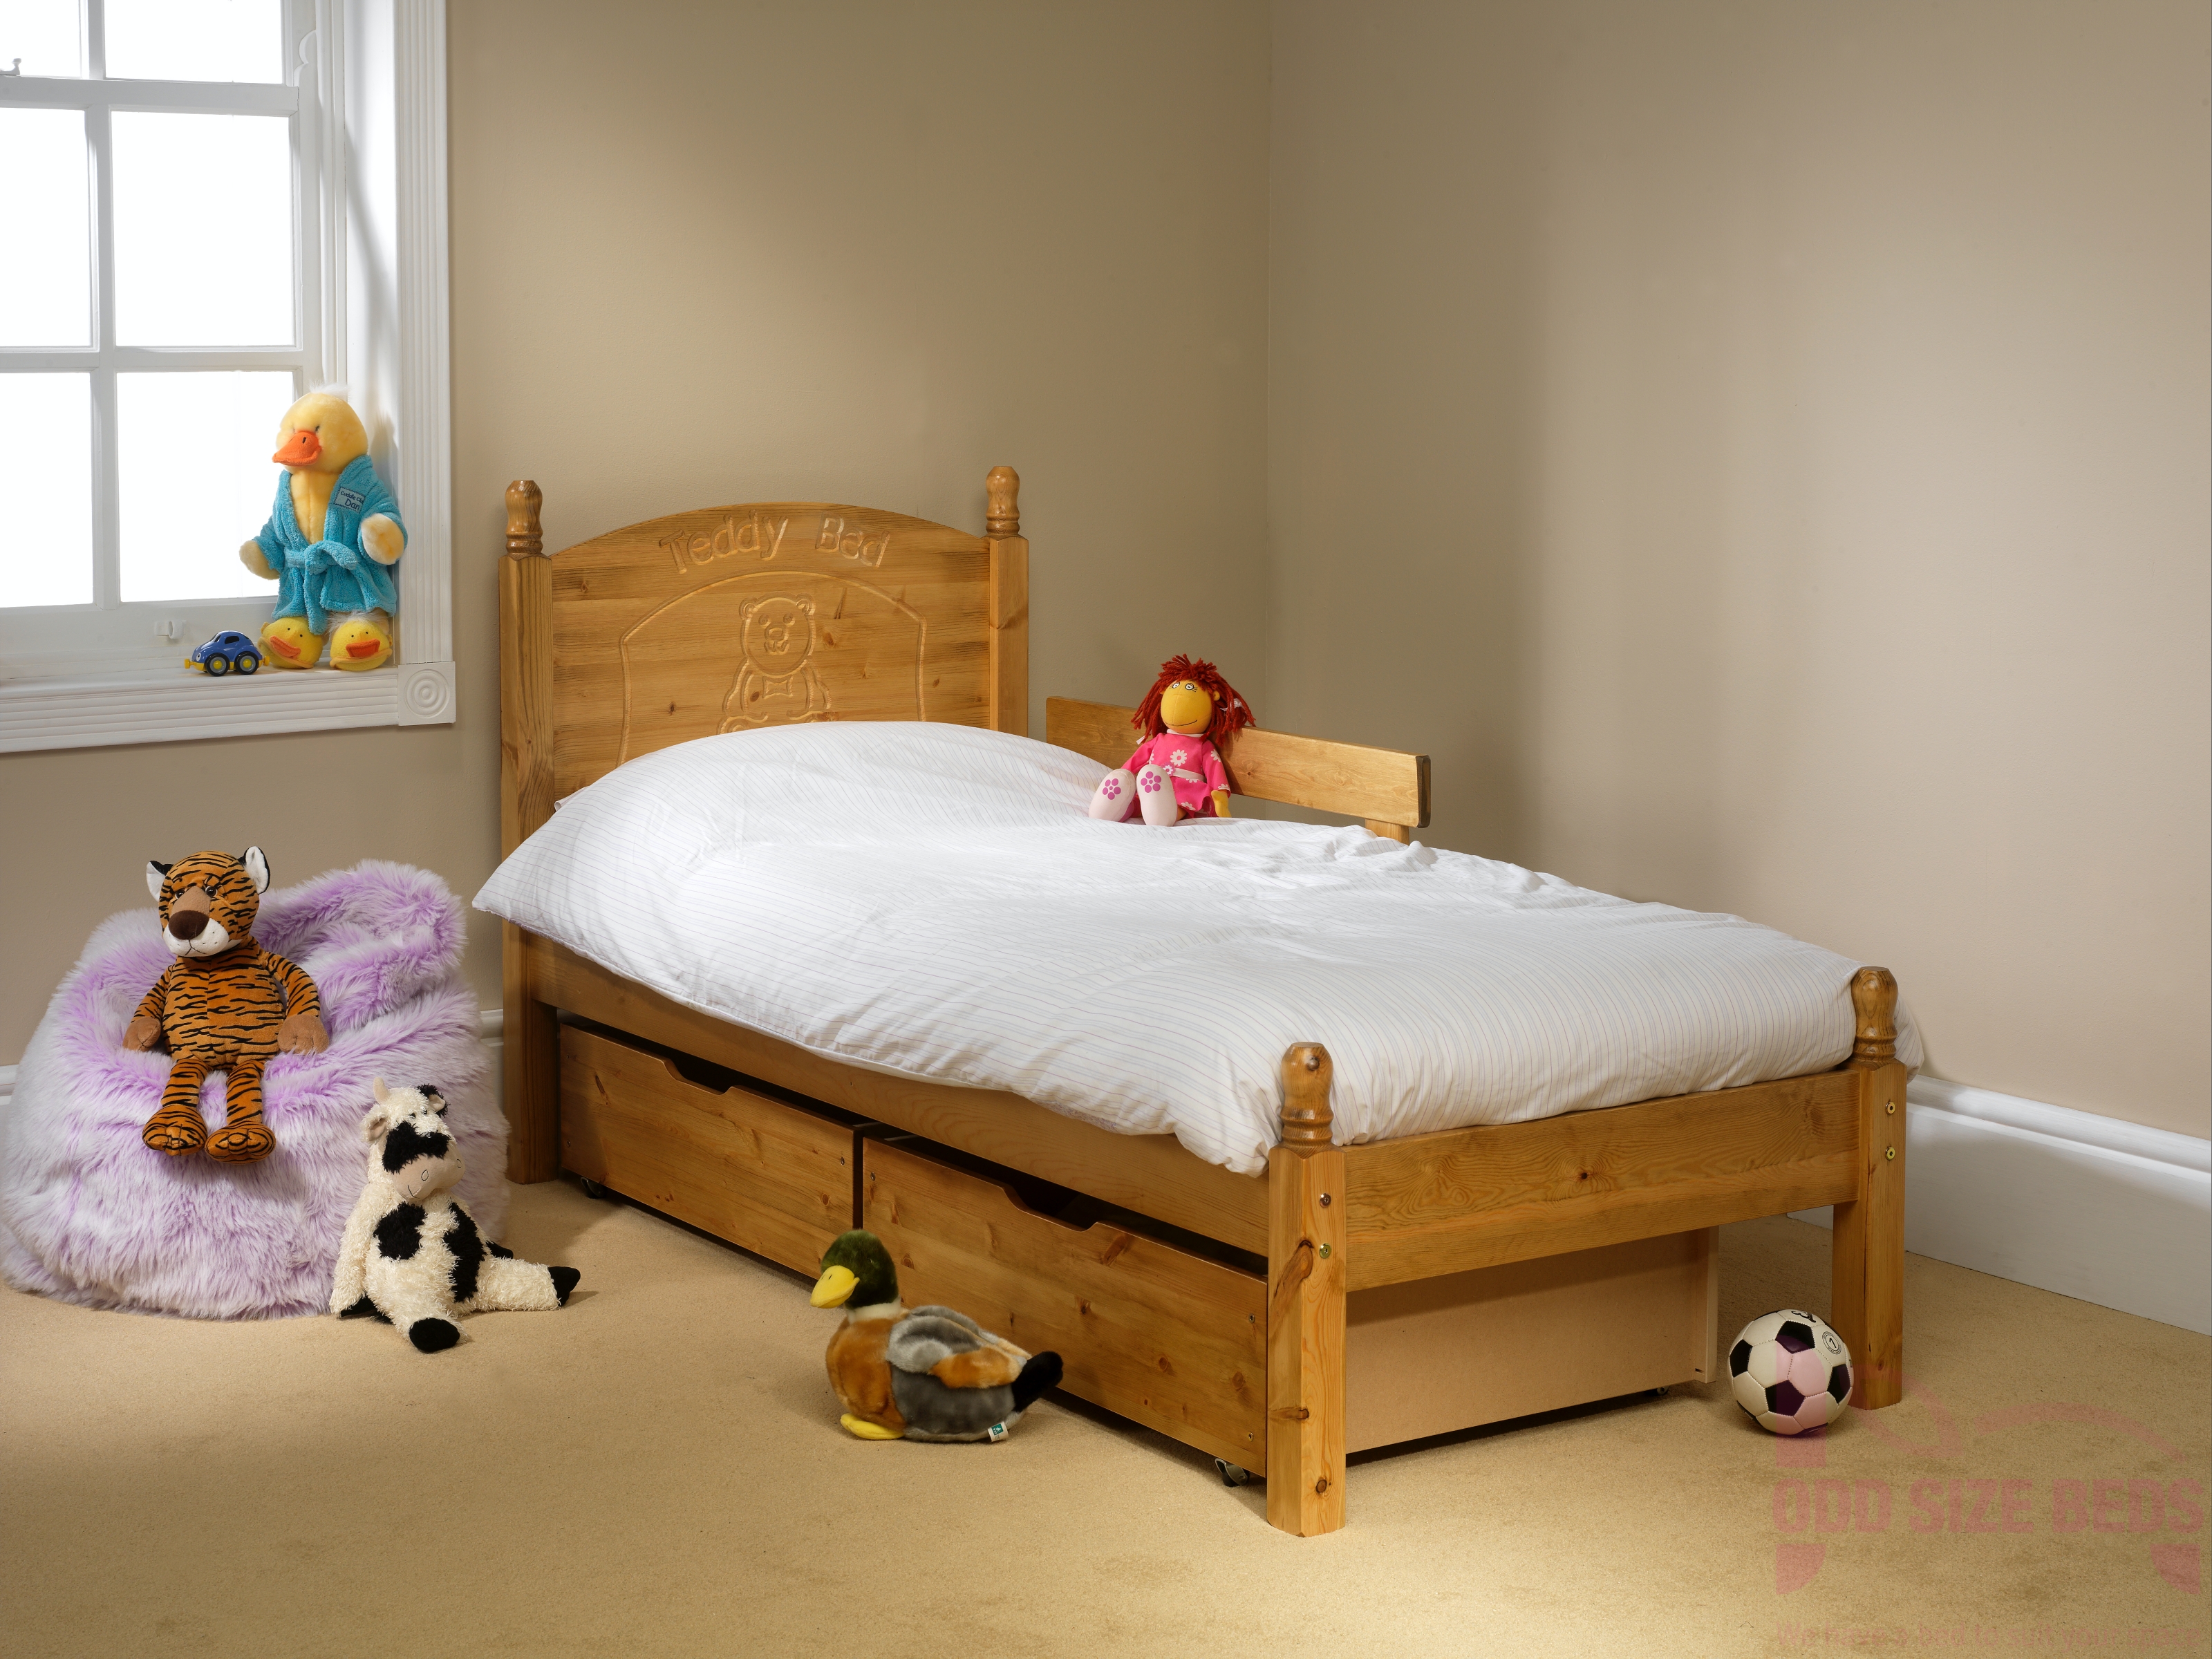 Children's Beds: Making Bedtime FUN!